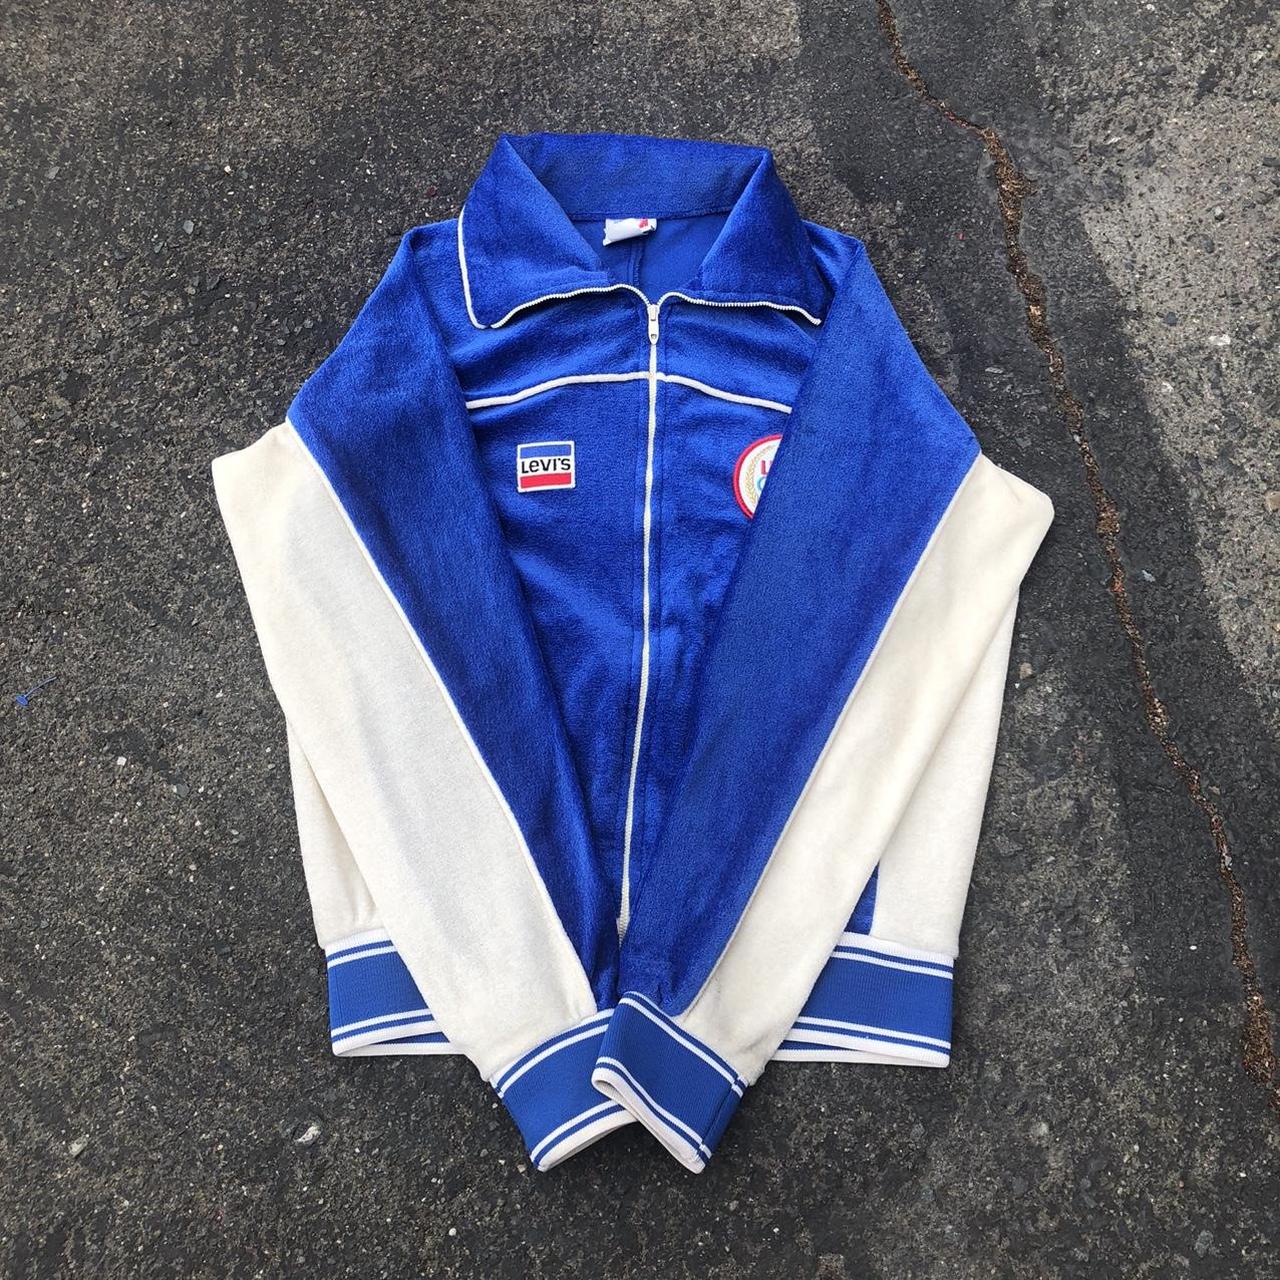 Vintage 1980 Levi’s Olympics track jacket size men’s... - Depop